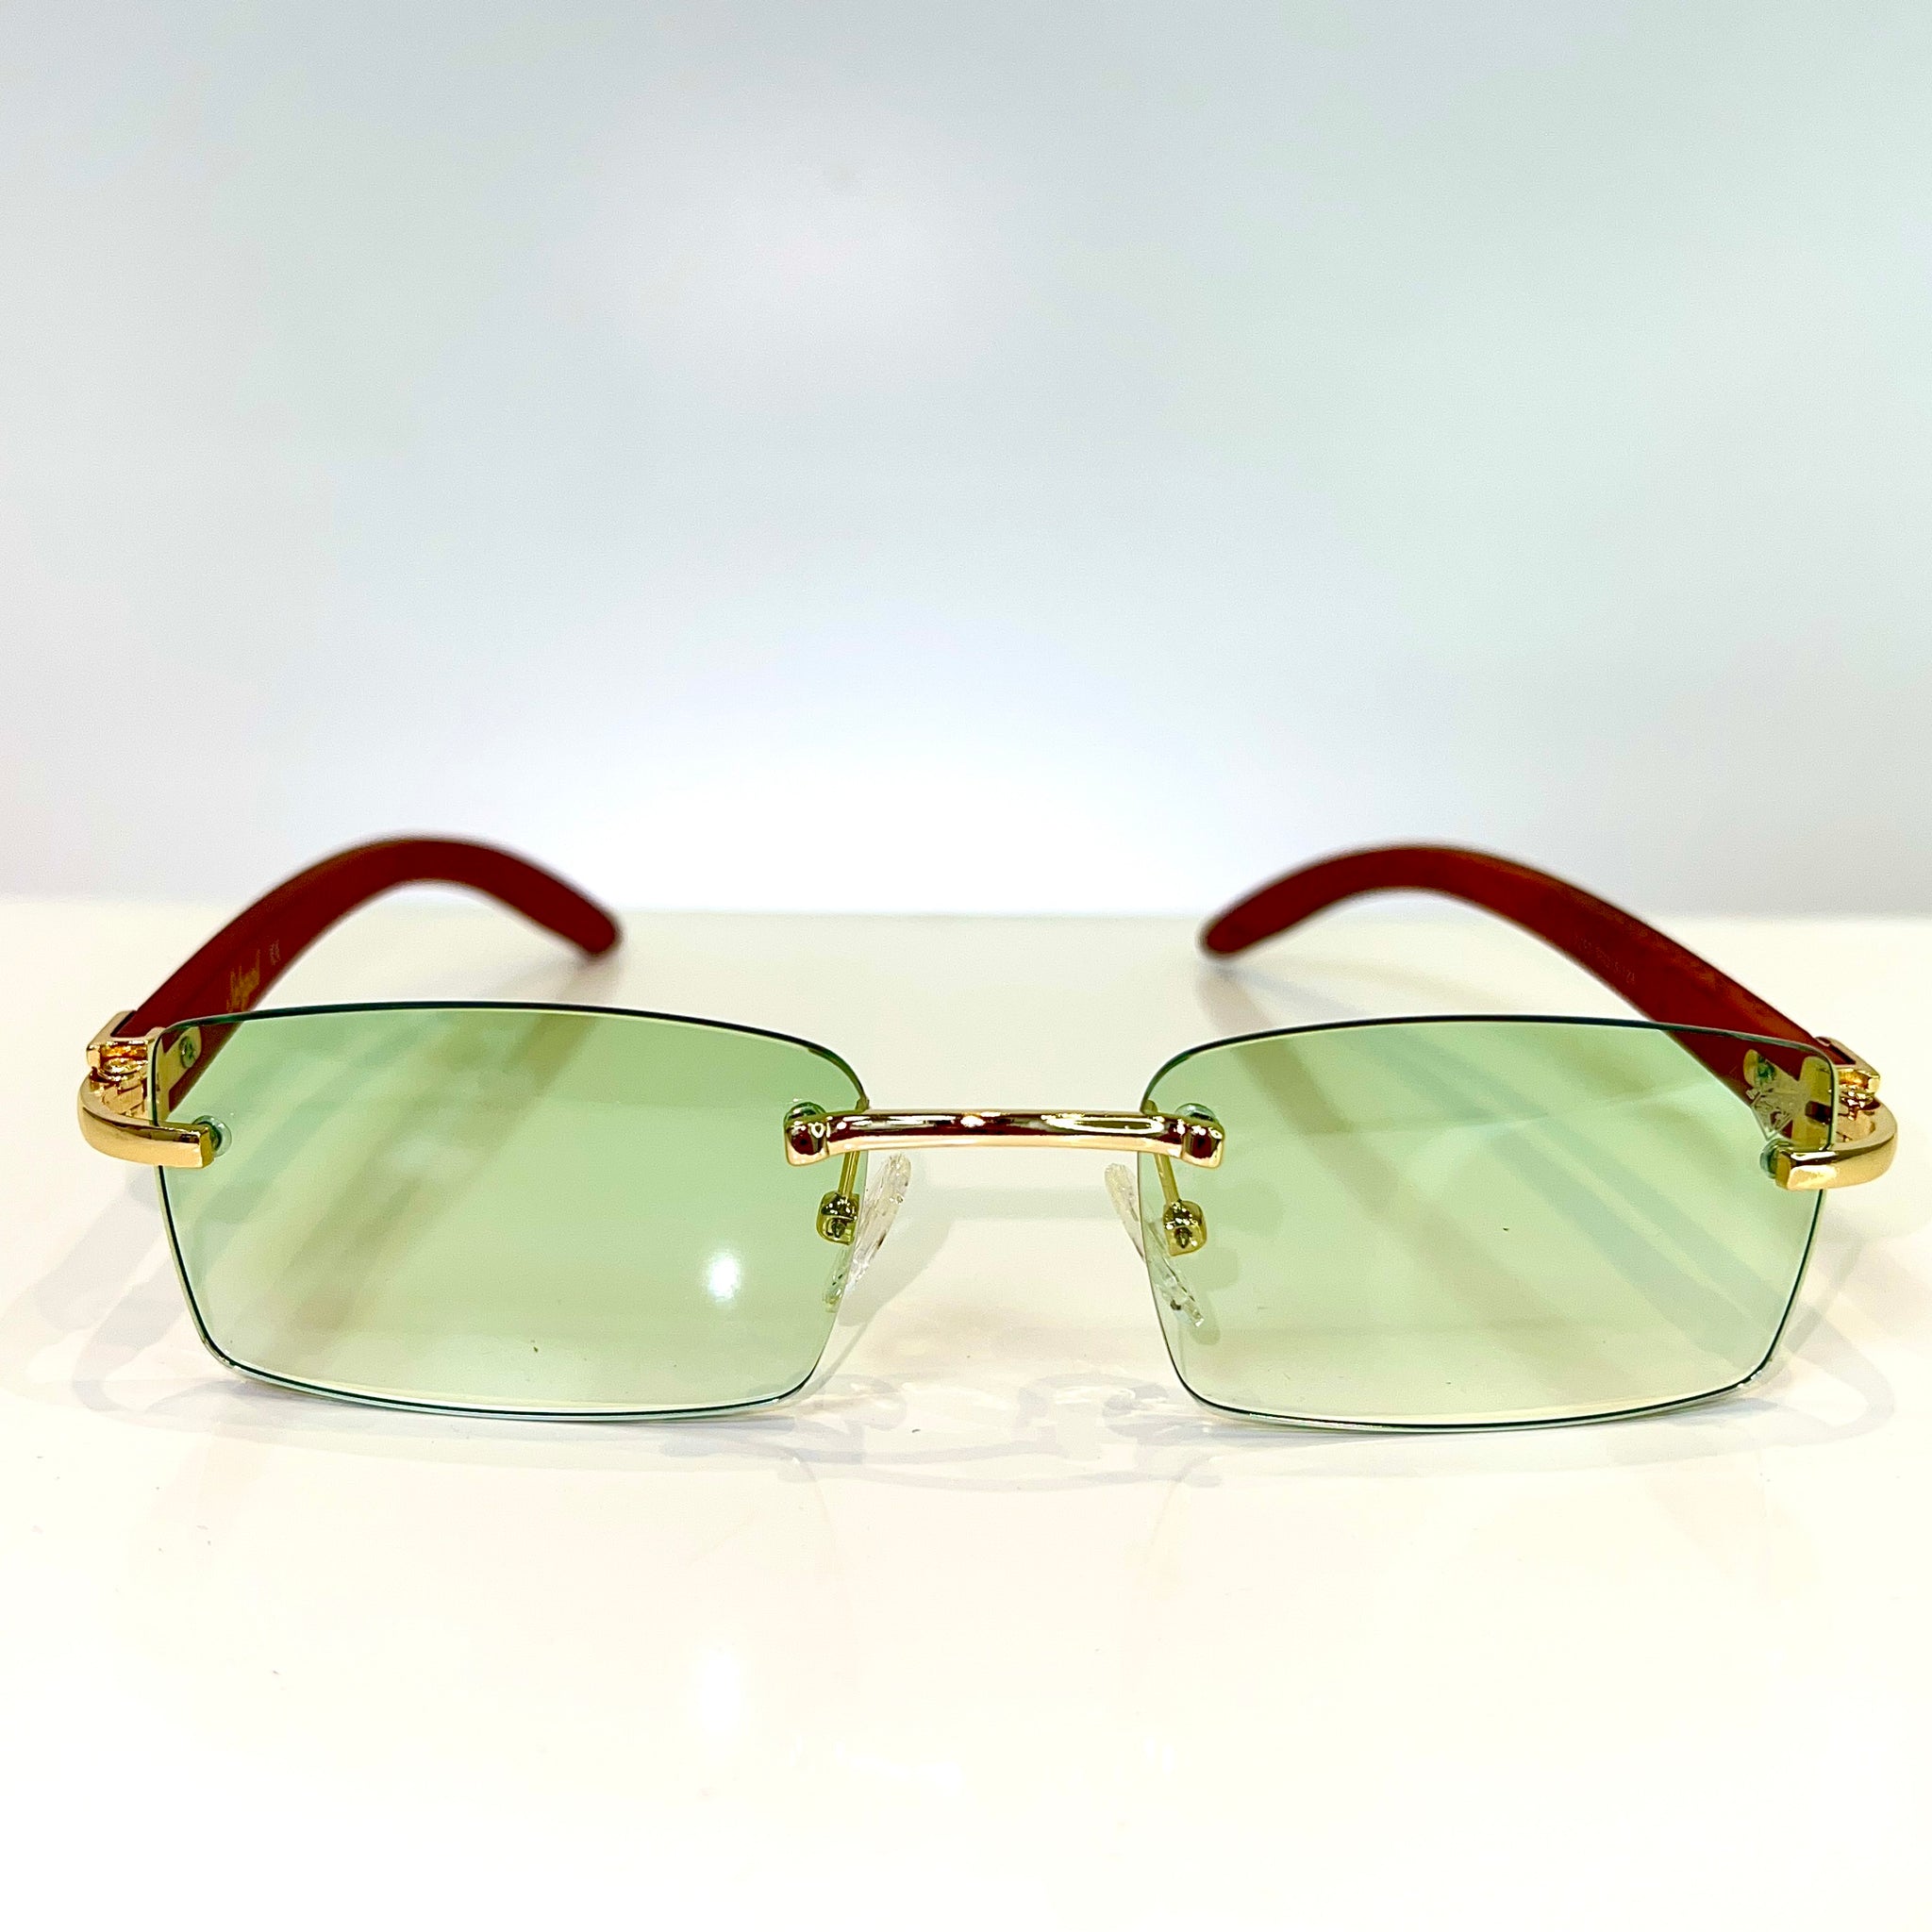 Guerrero Glasses - 14 carat gold plated -  Green Shade